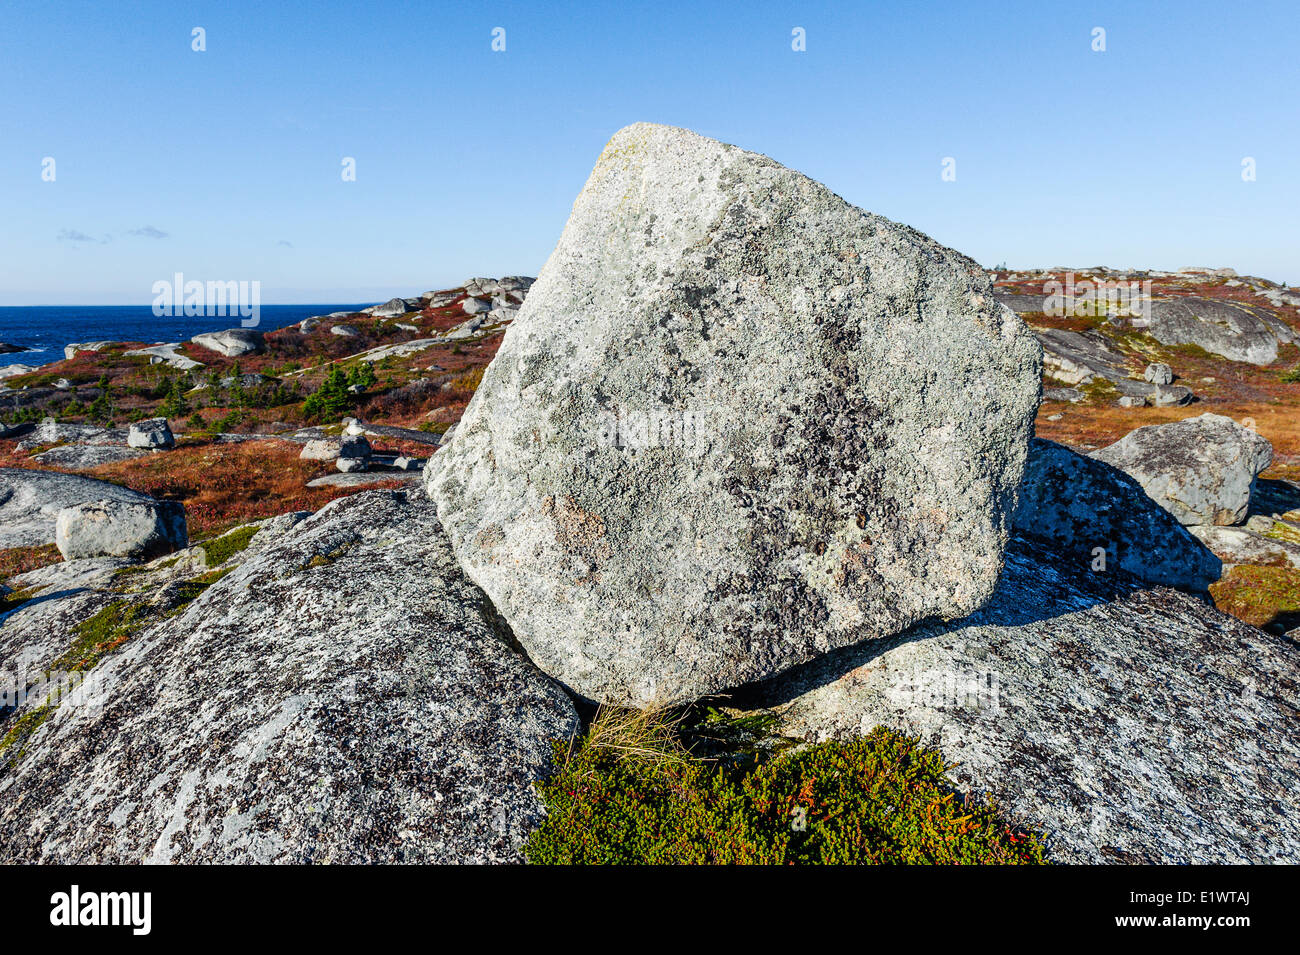 Devonian granite boulders. Atlantic Ocean coastline. Peggys Cove Conservation Area, Nova Scotia. Canada. Stock Photo